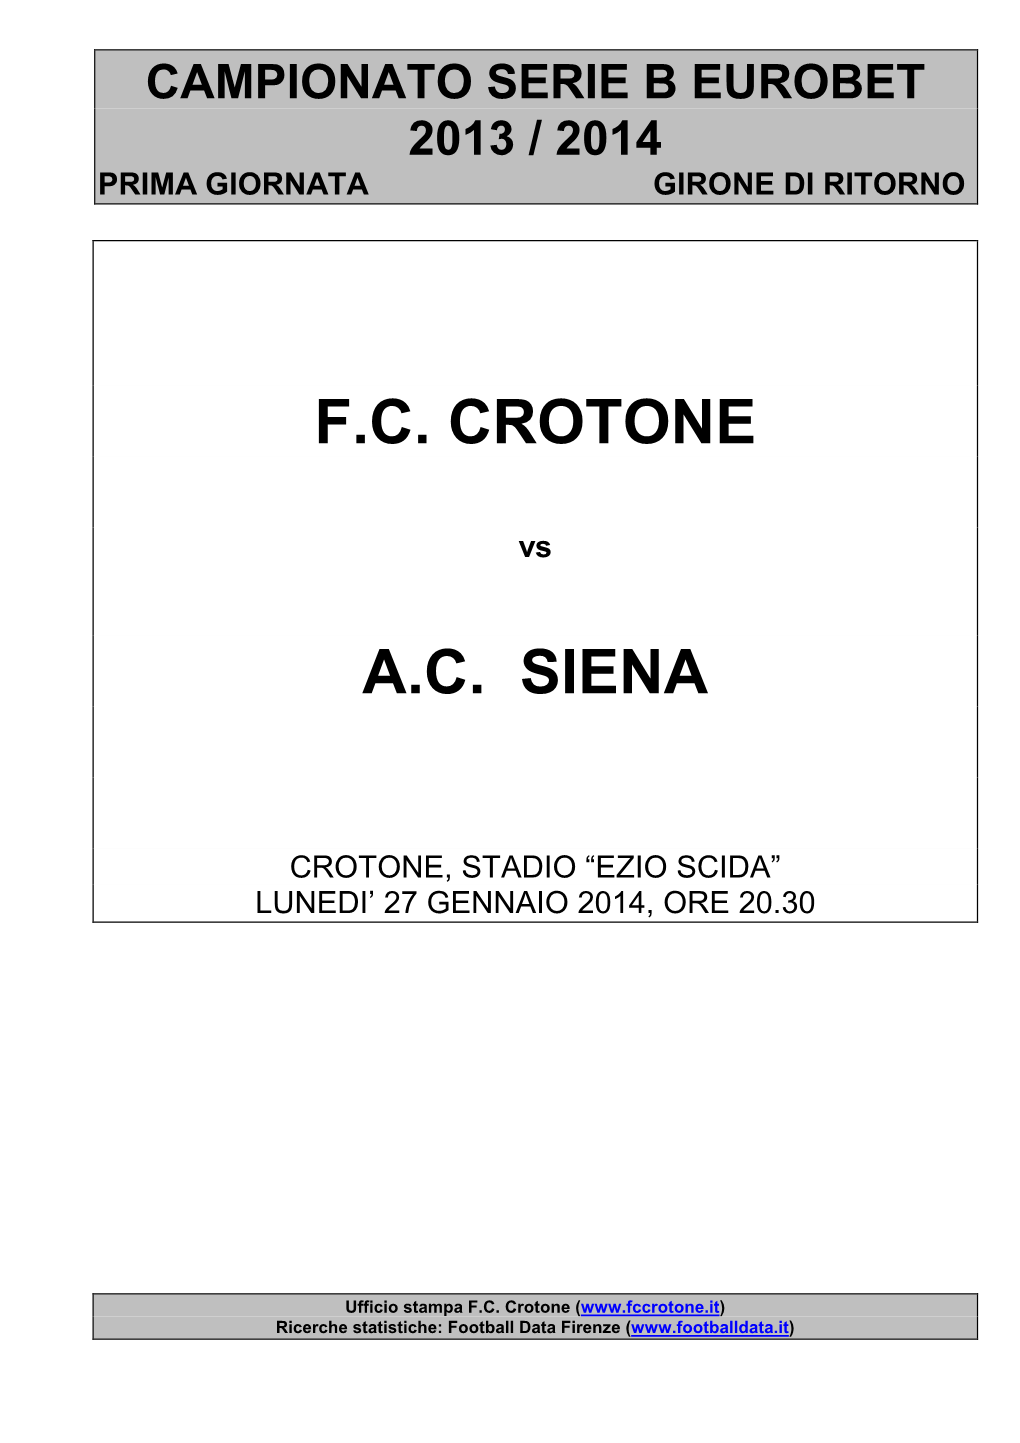 Crotone-Siena